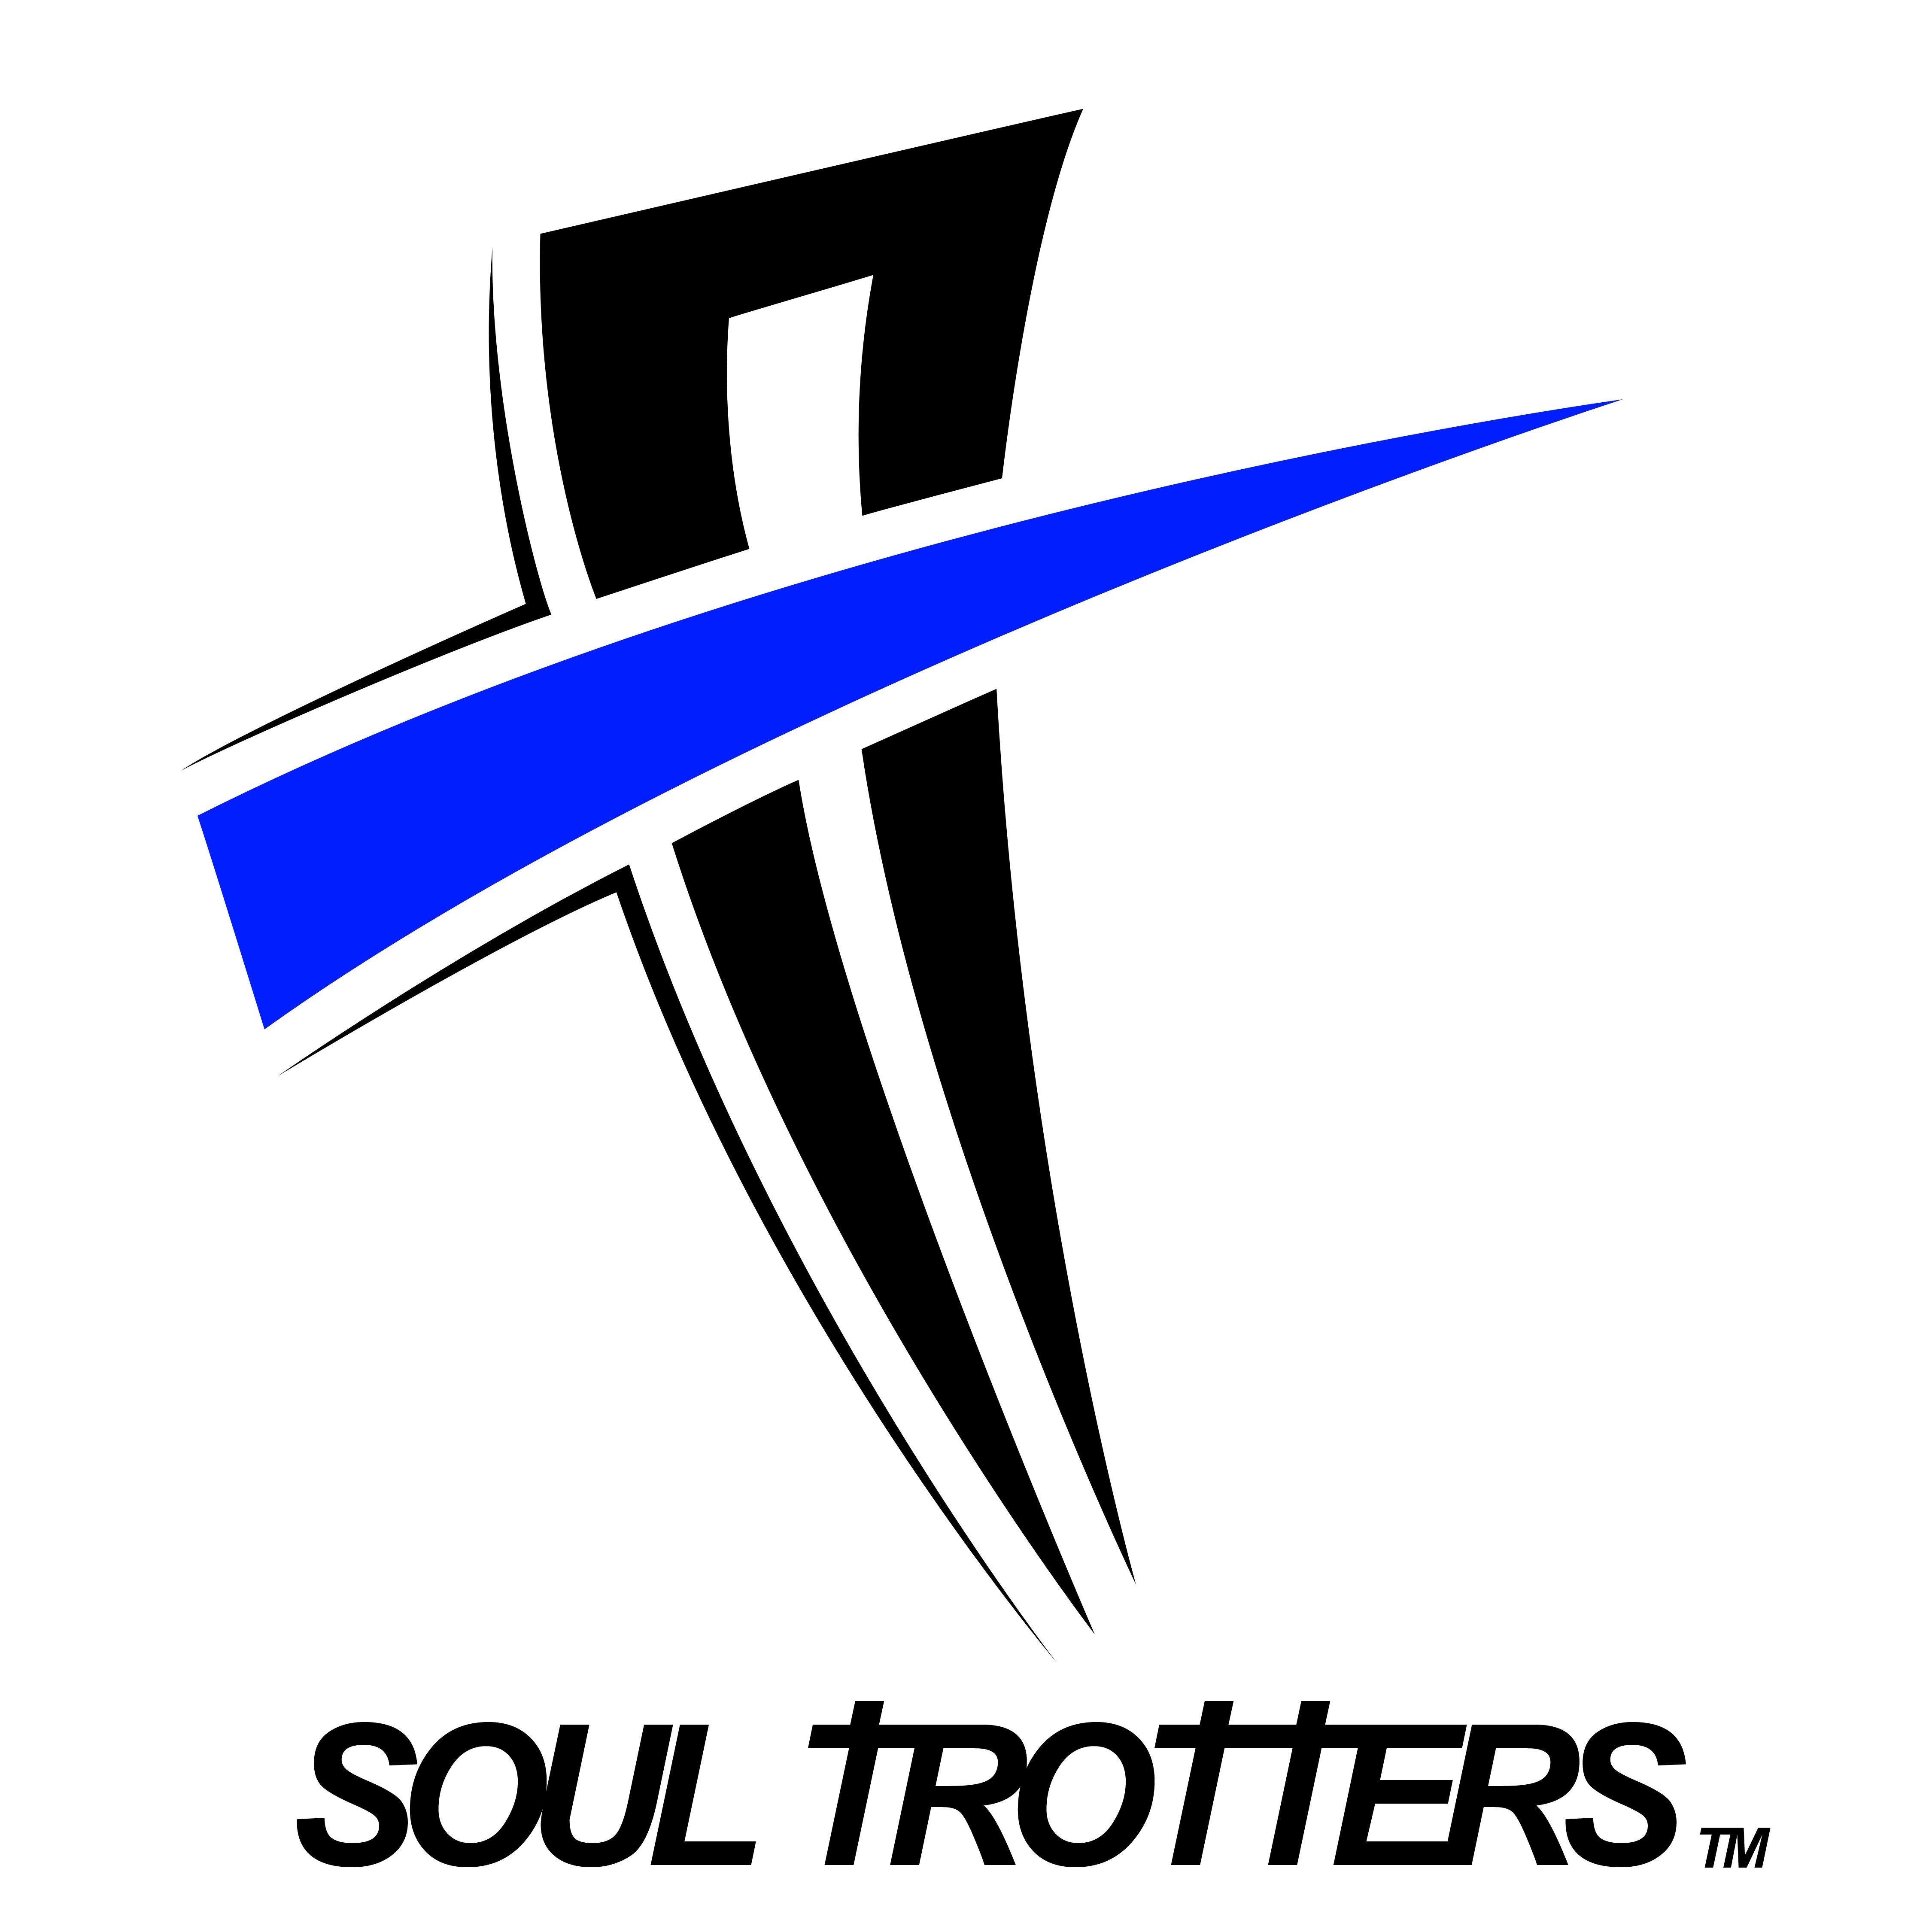 Trotters Logo - Amazon.com: Soul Trotters